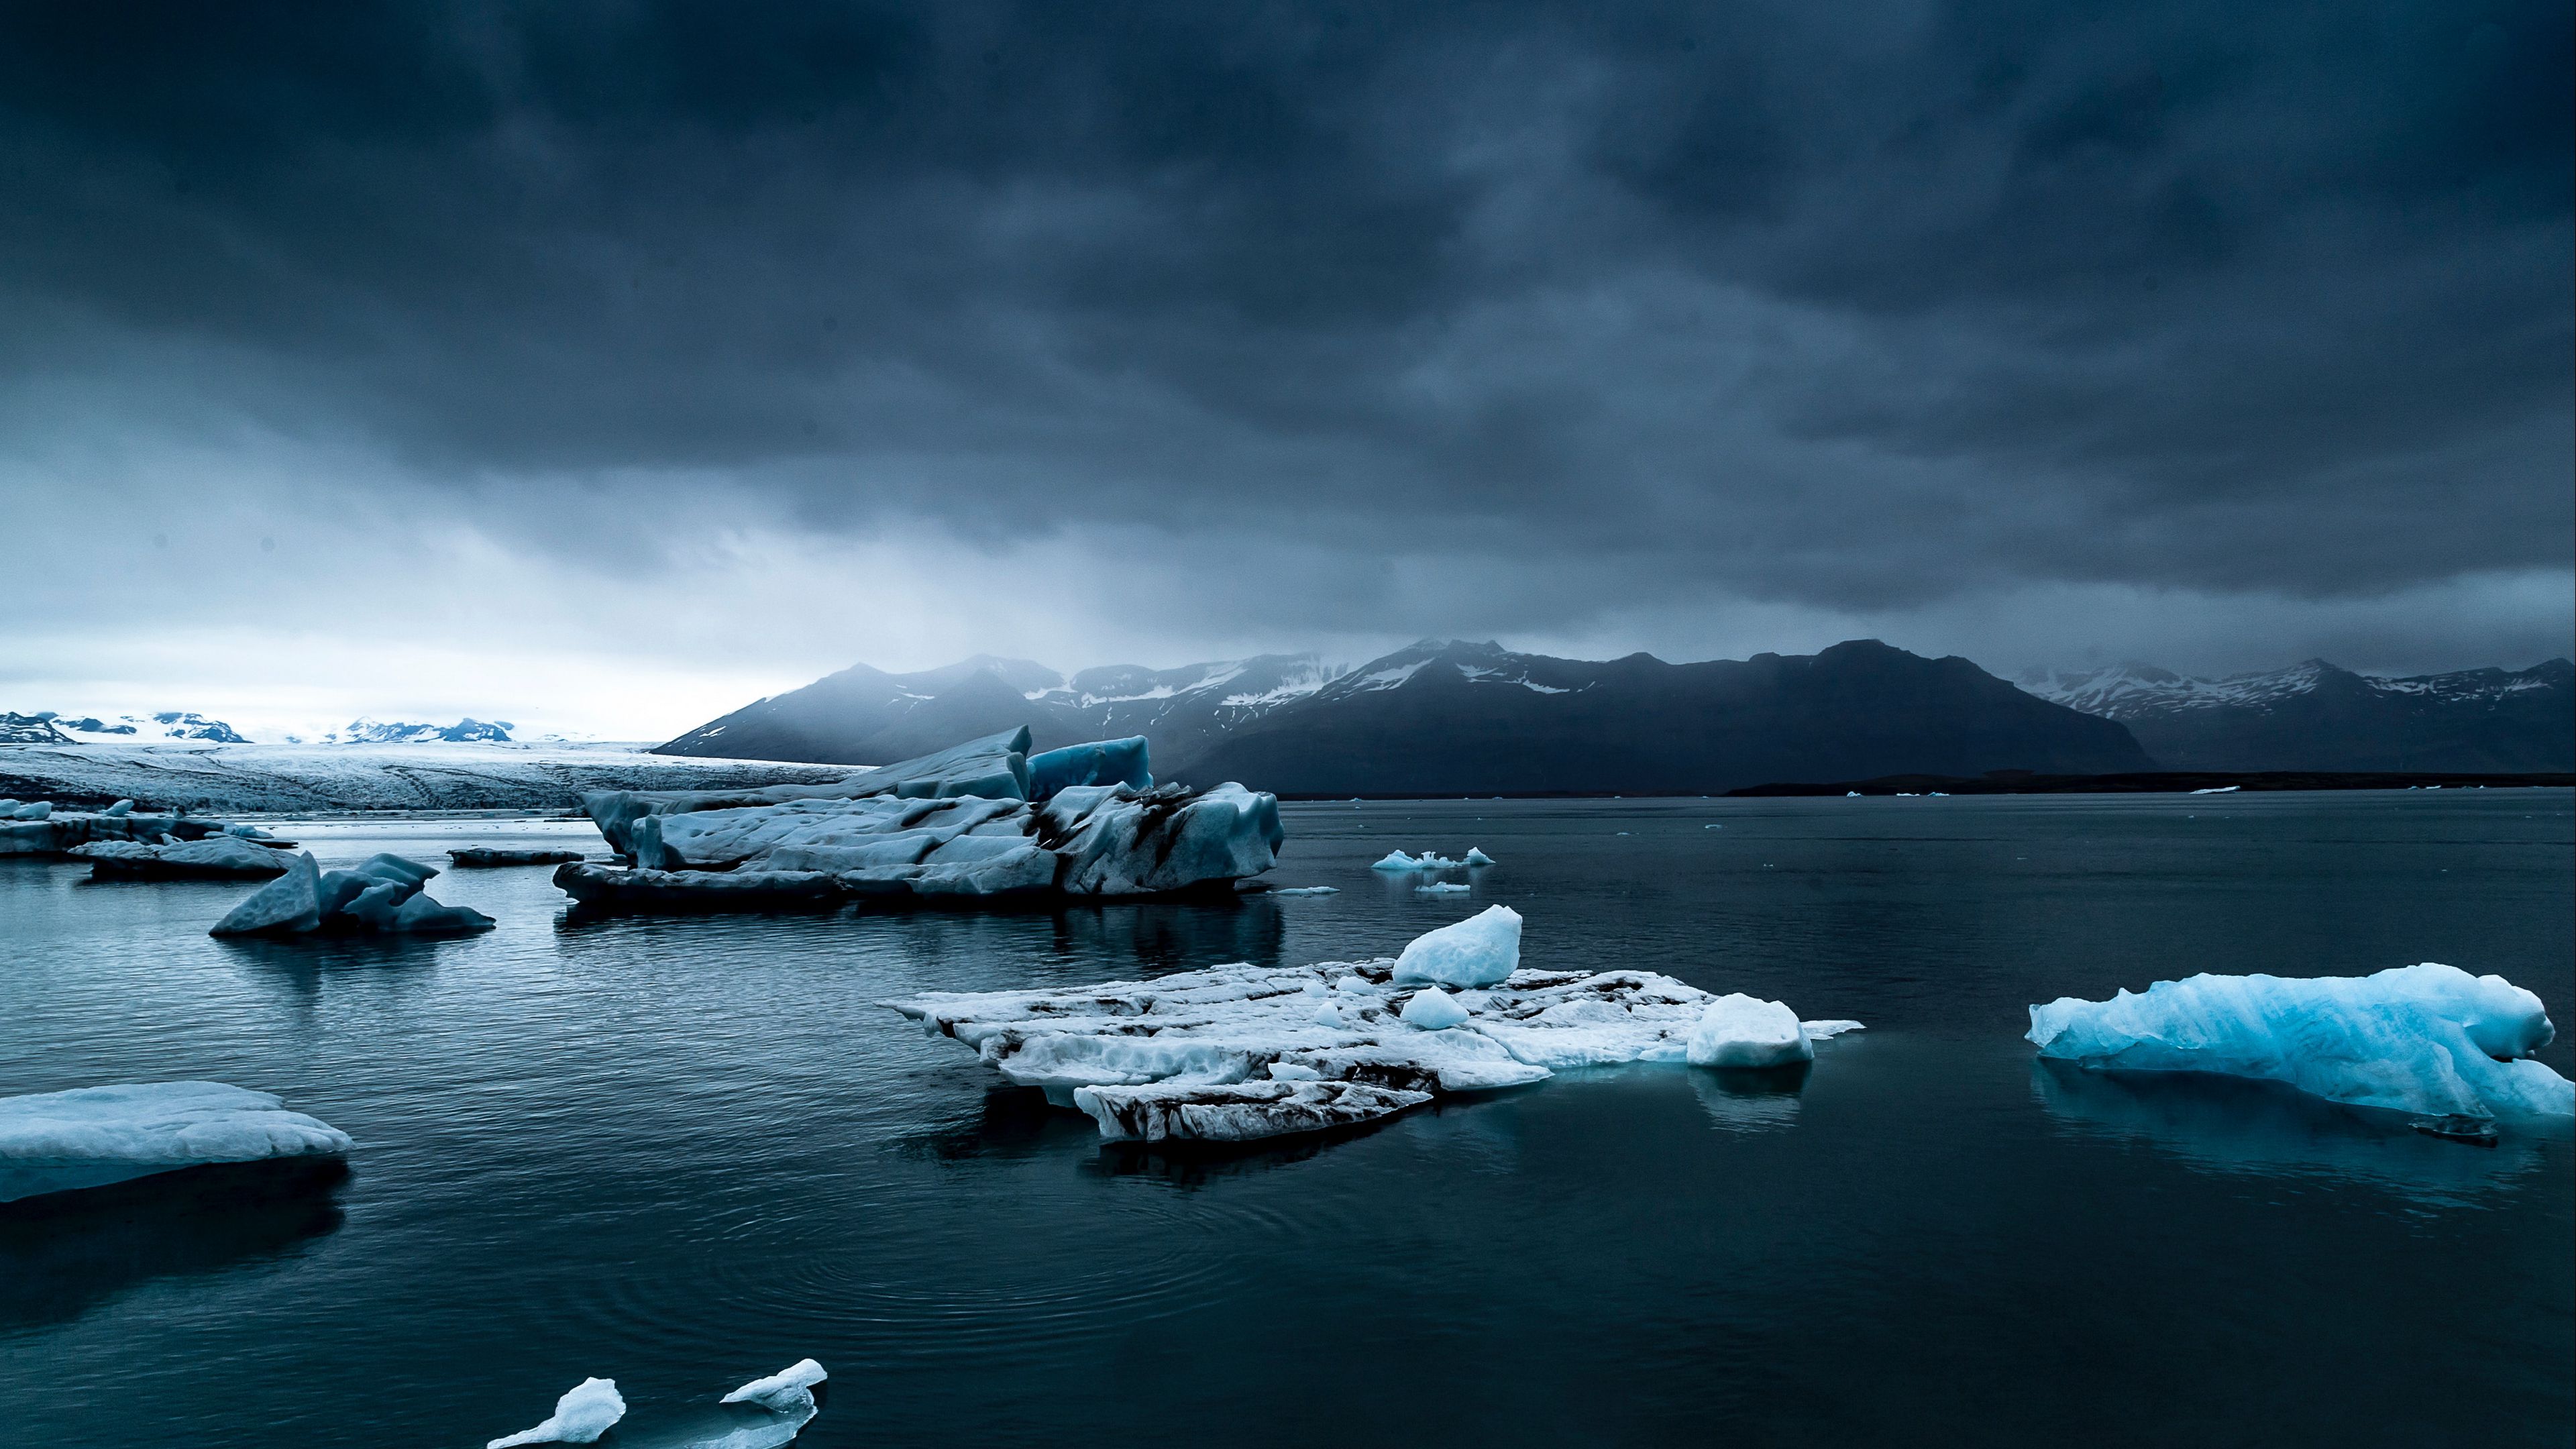 Download wallpaper 3840x2160 iceberg, ice, snow, lake, fog, mountains,  iceland 4k uhd 16:9 hd background